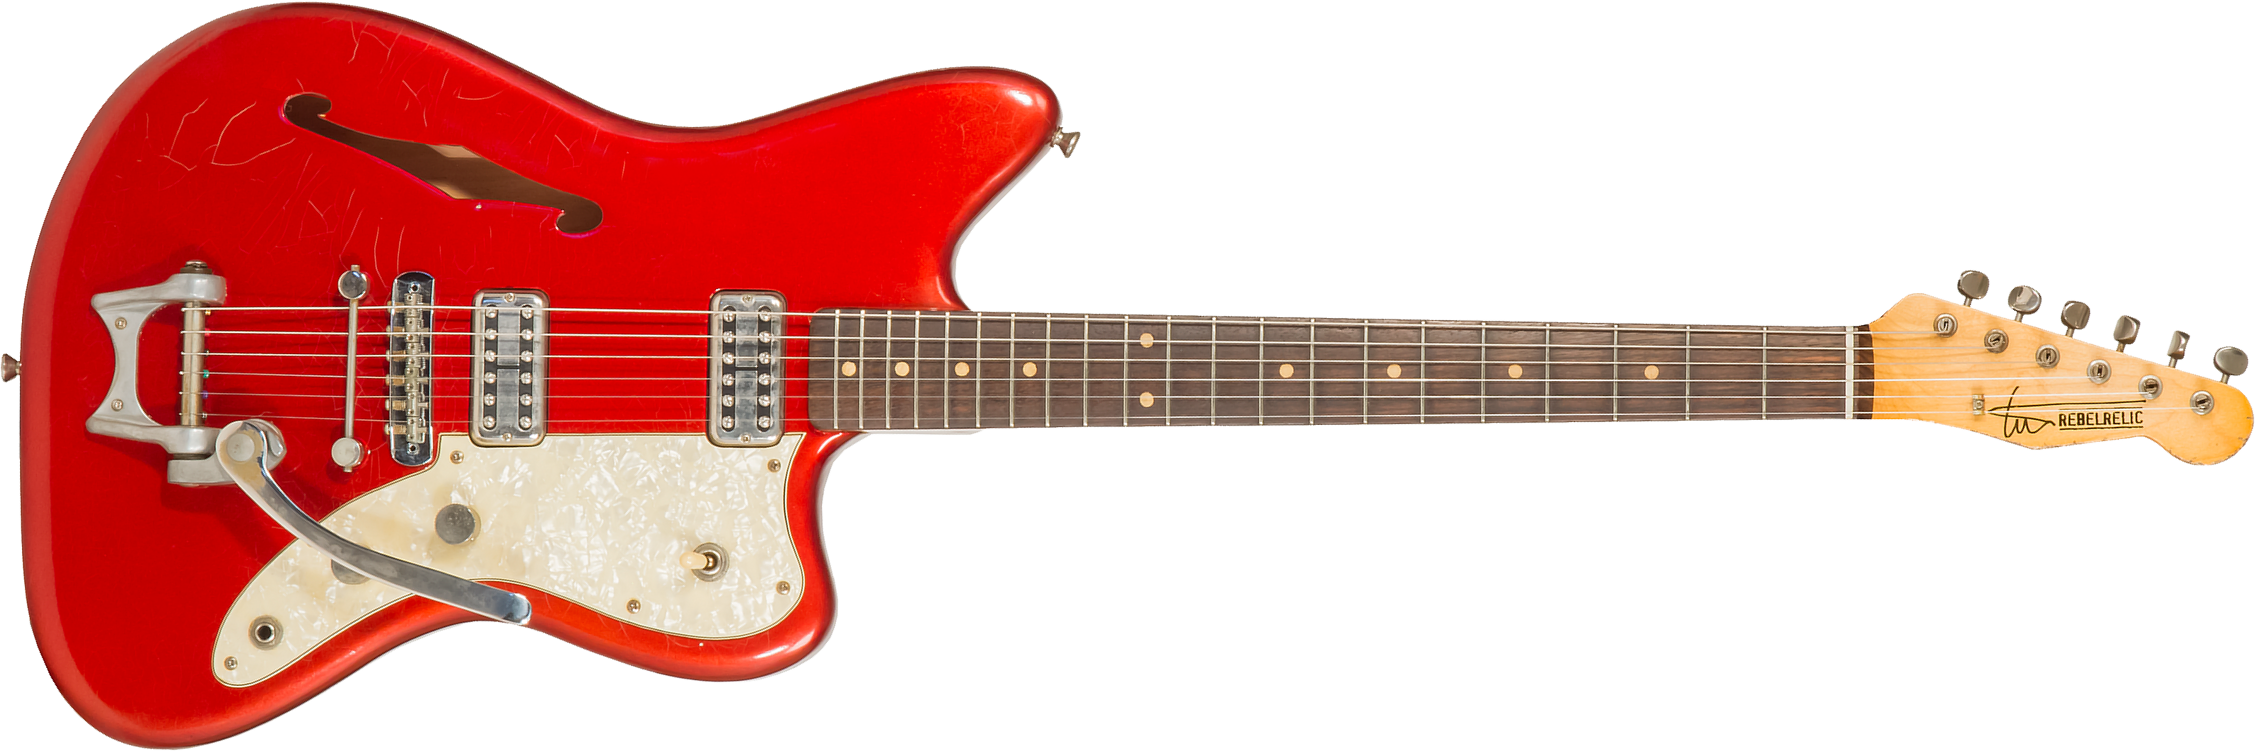 Rebelrelic Wrangler 2h Trem Rw #62175 - Light Aged Candy Apple Red - Semi-Hollow E-Gitarre - Main picture